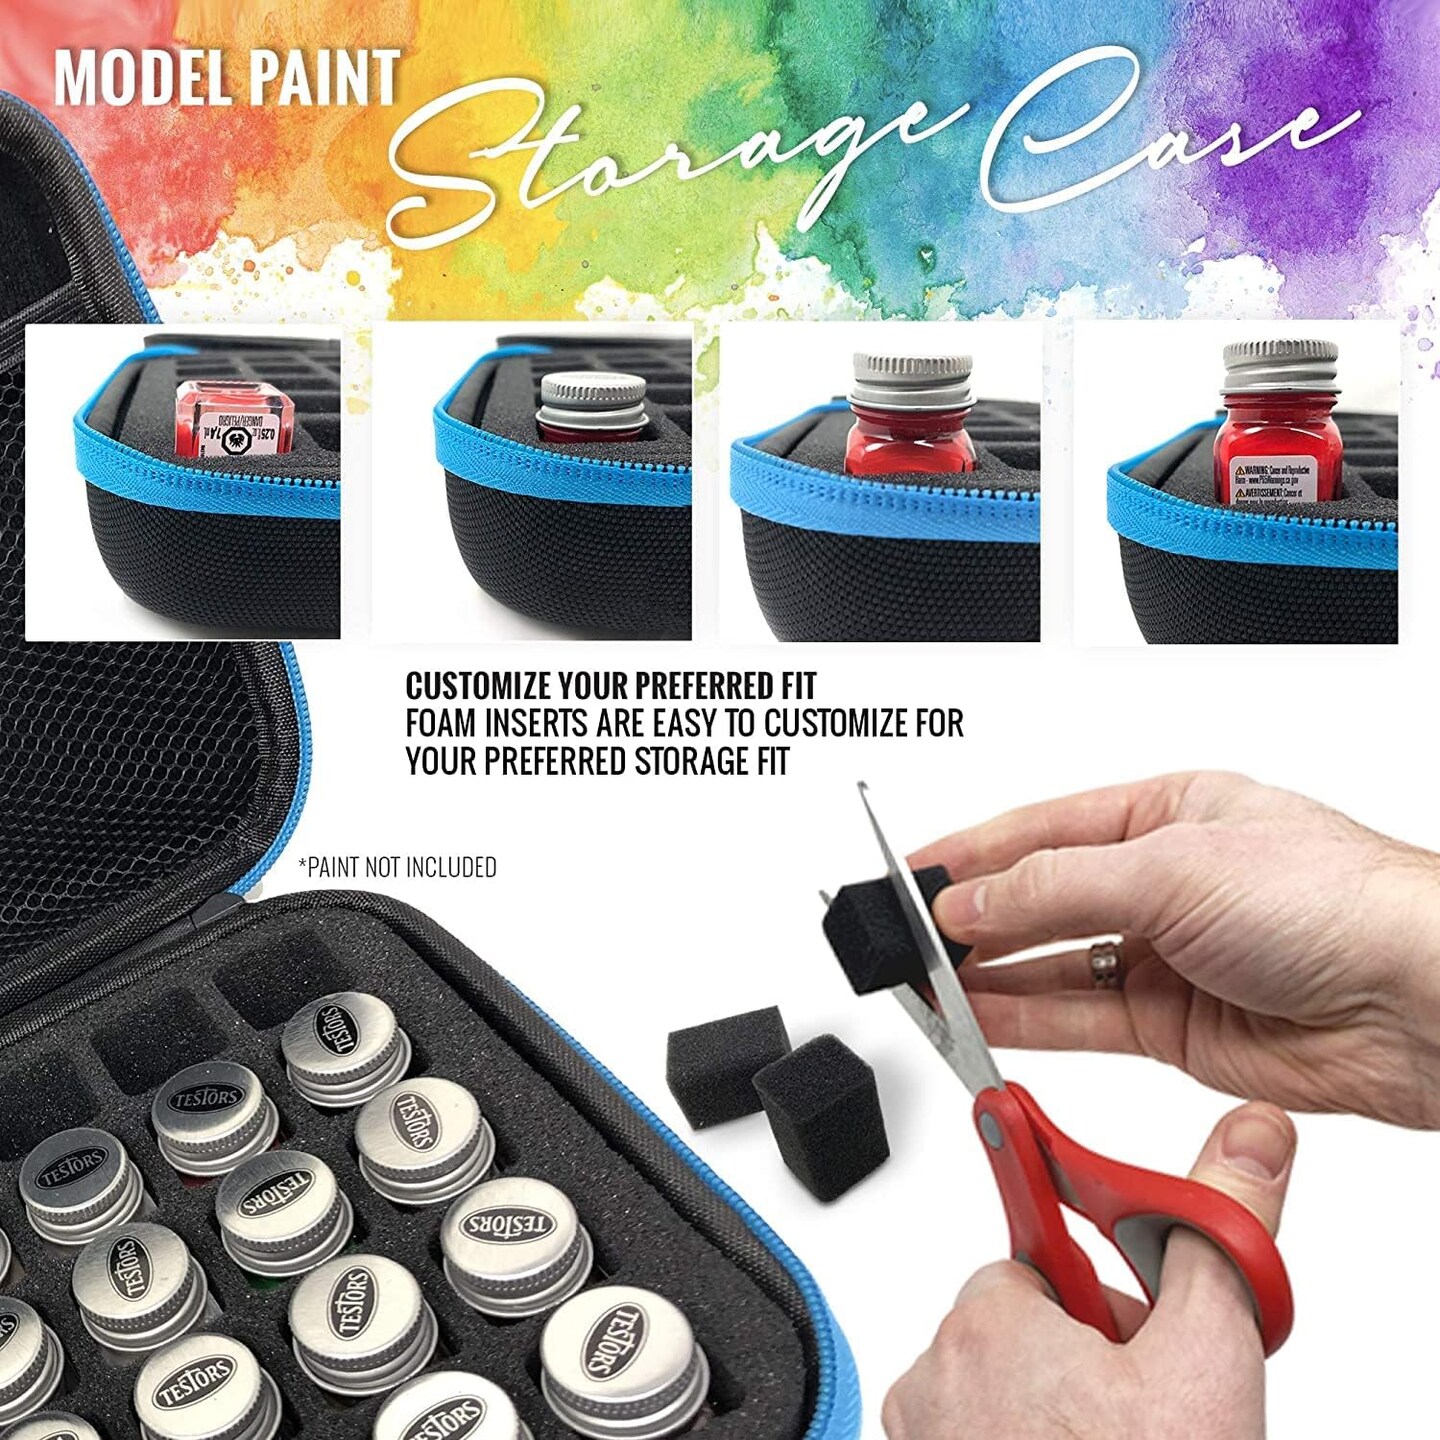  Testors 9146XT Promotional Enamel Paint Set( Packaging may  vary) : Arts, Crafts & Sewing